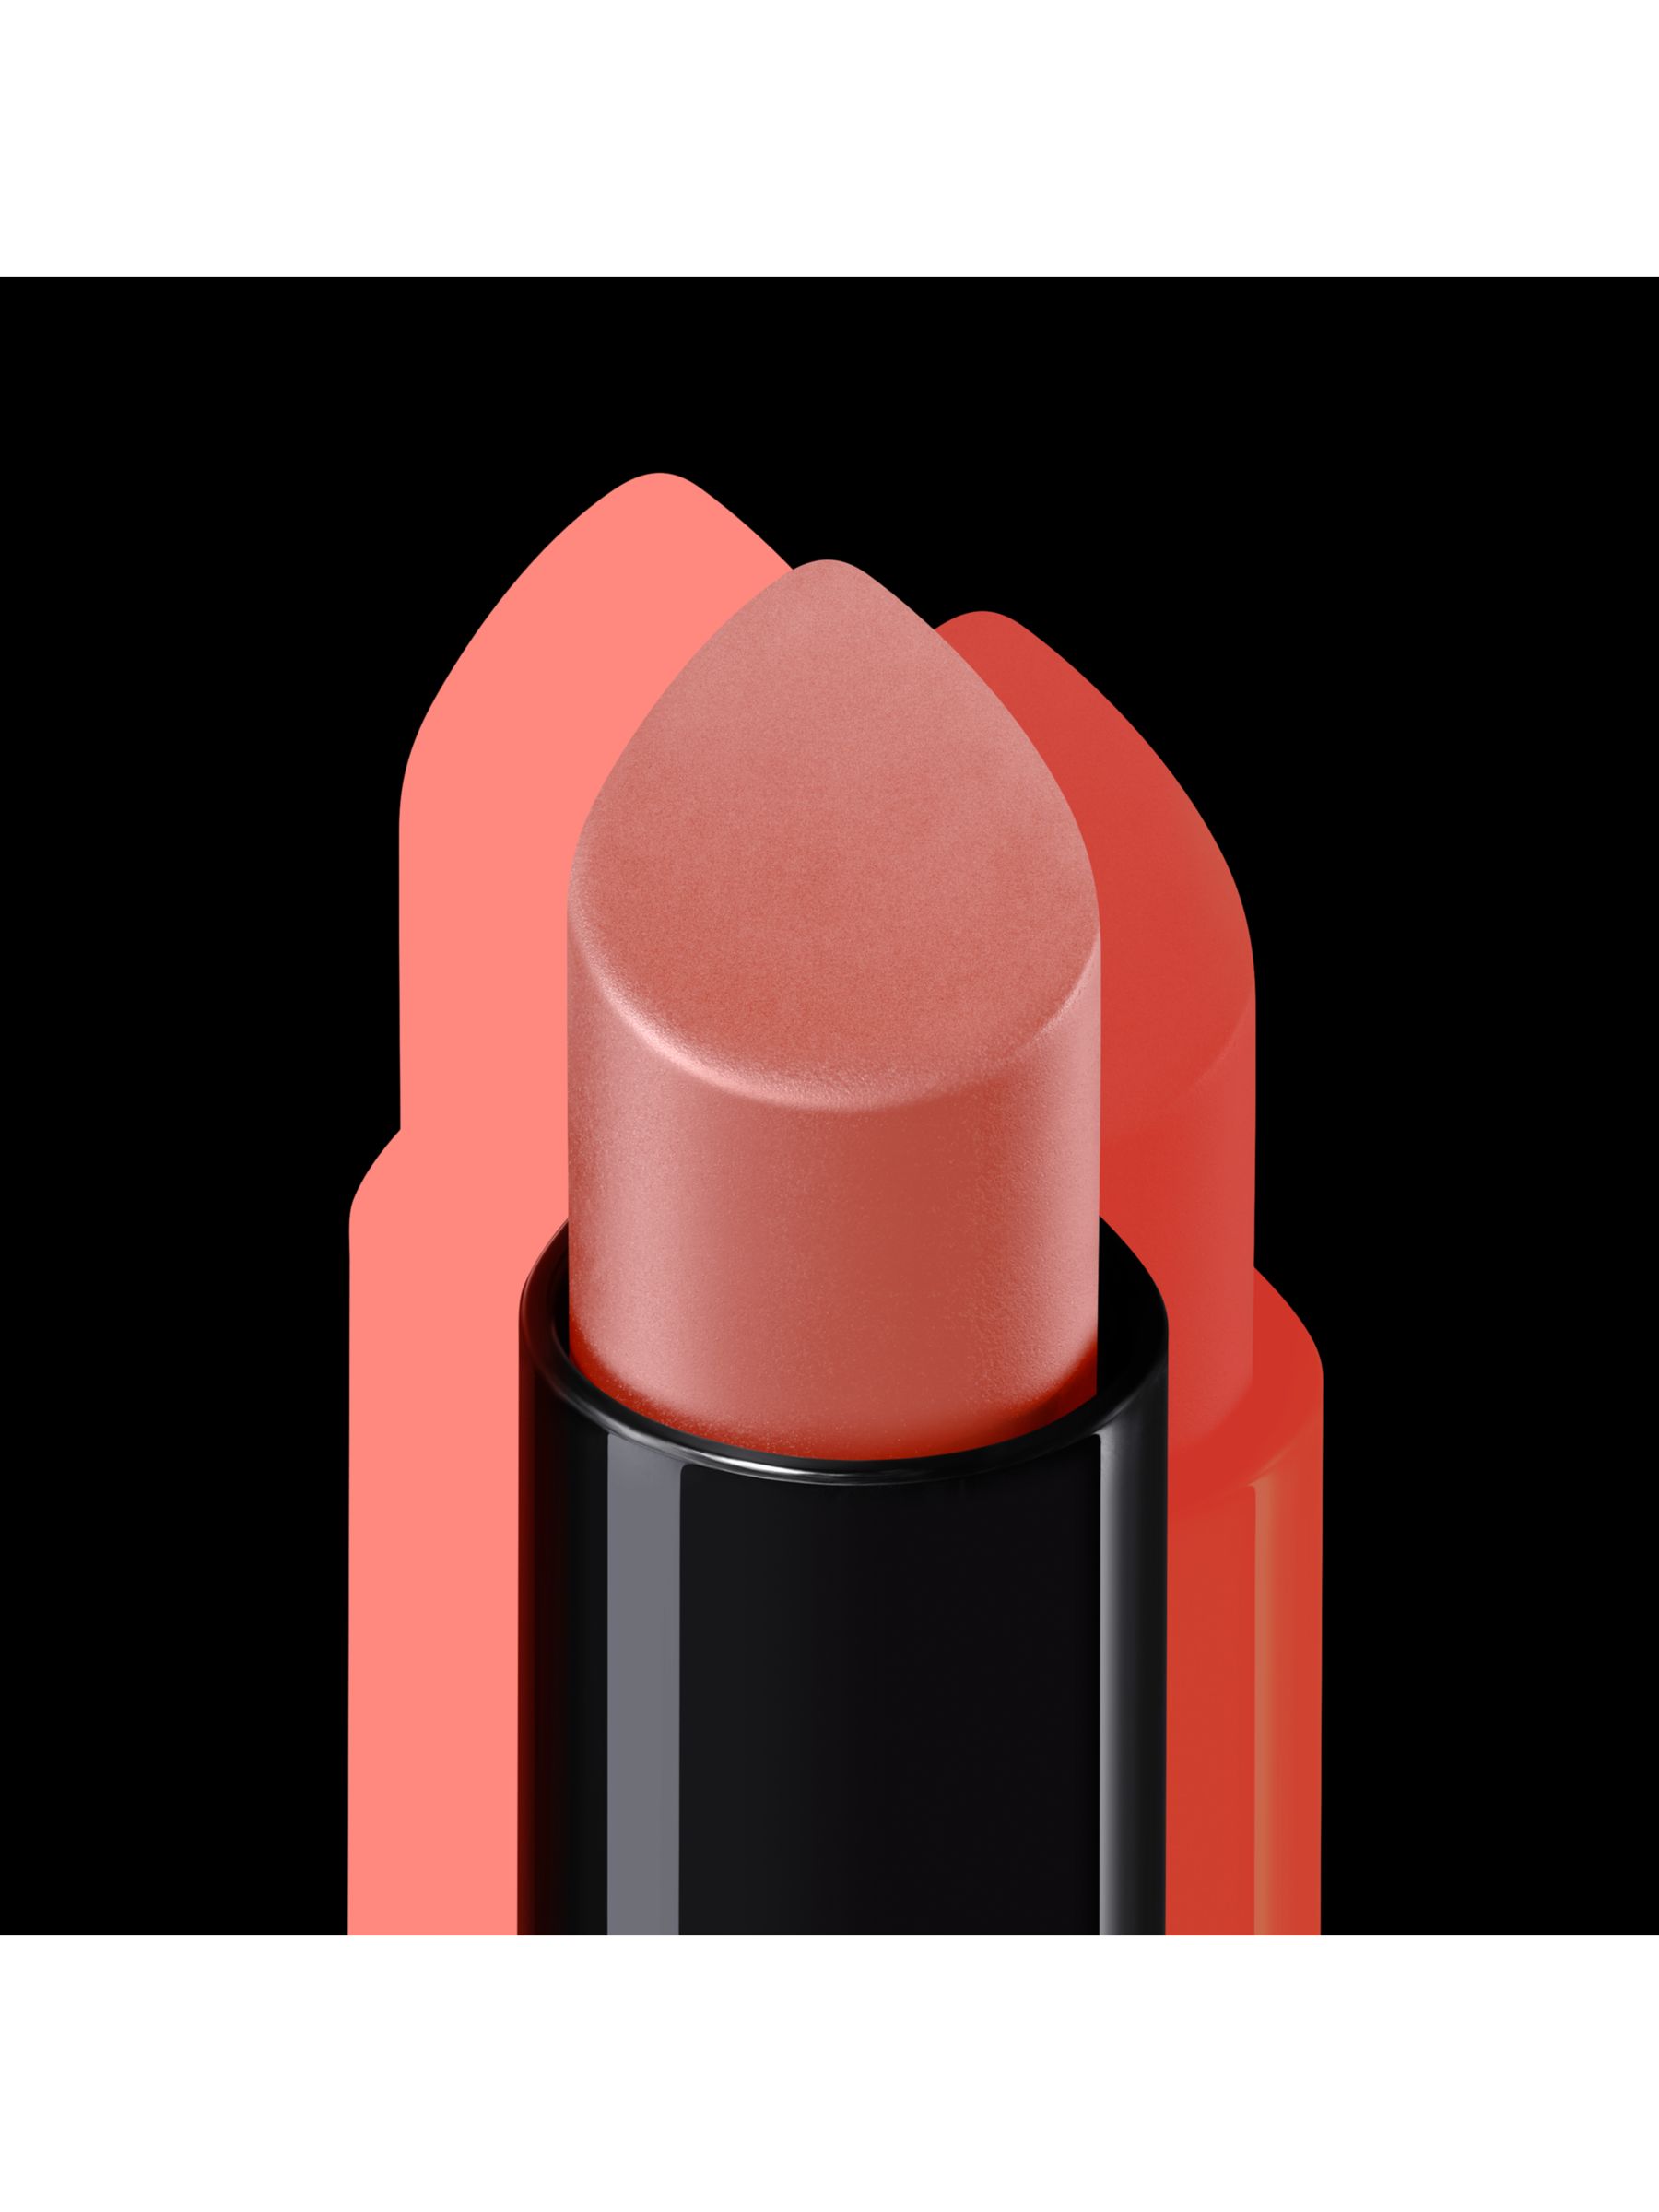 Giorgio Armani Lip Power Vivid Colour Long Wear Lipstick, 104 Selfless at  John Lewis & Partners